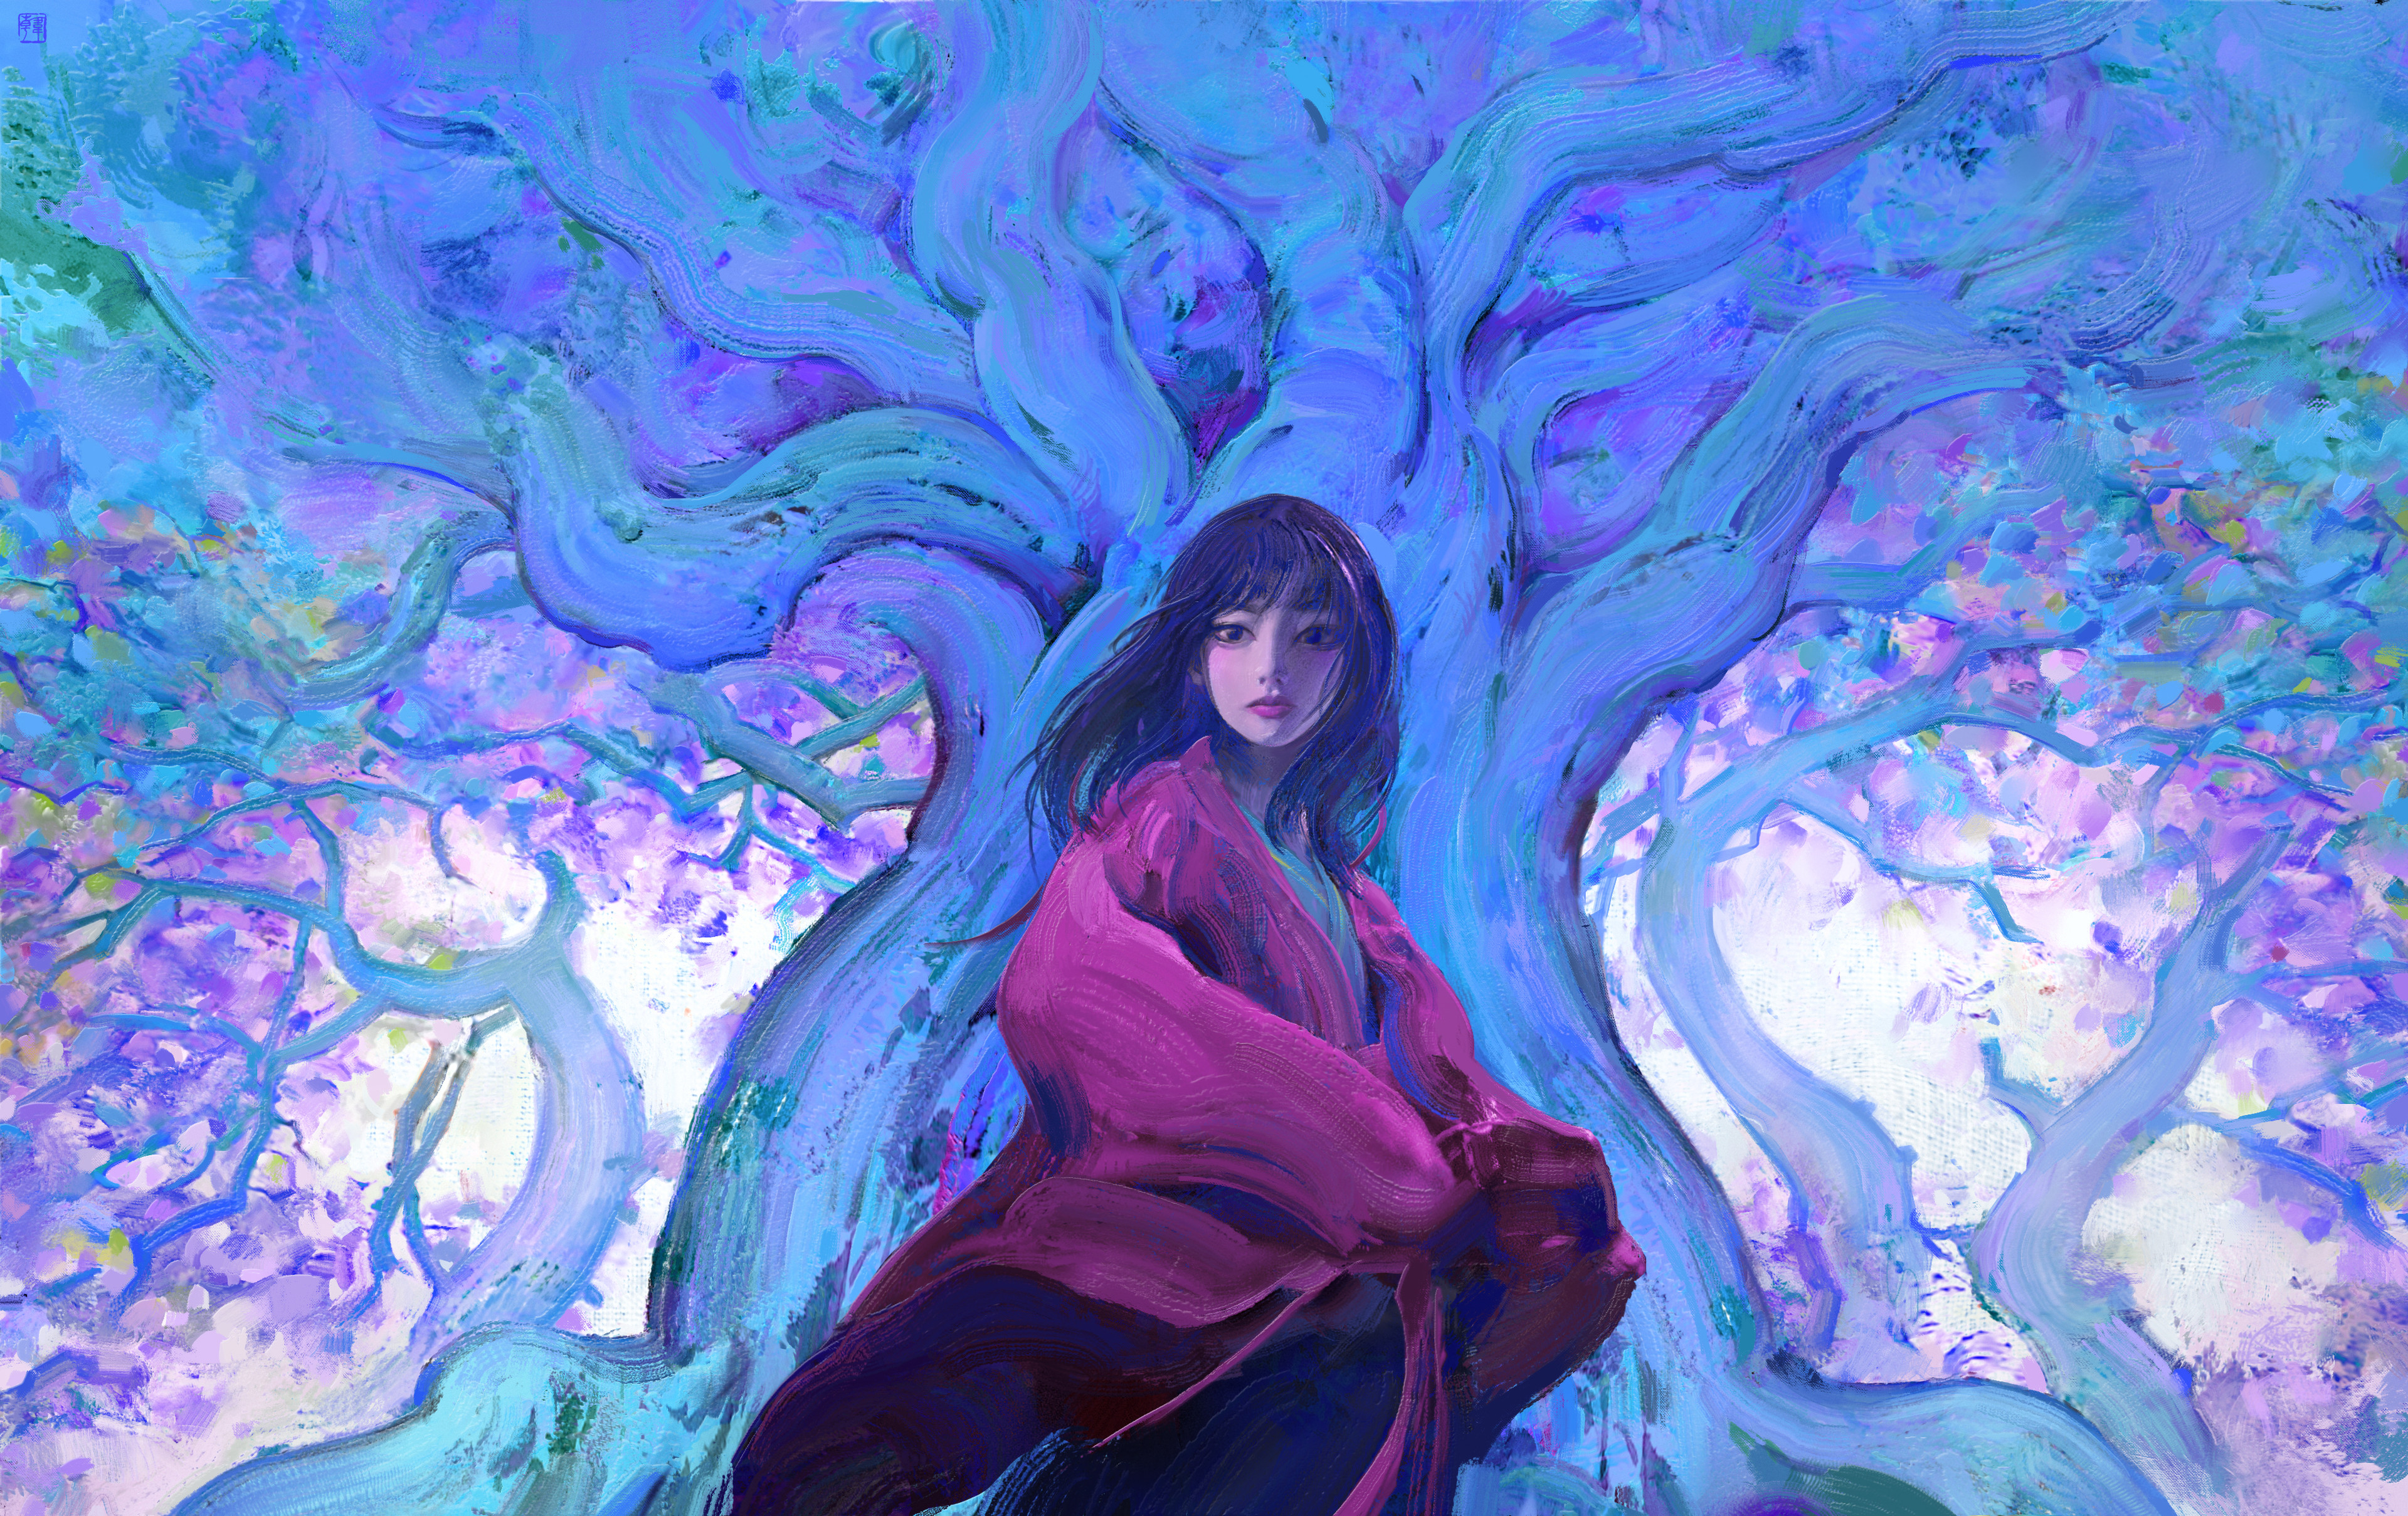 General 3840x2418 digital art artwork illustration painting blue women forest trees dark hair